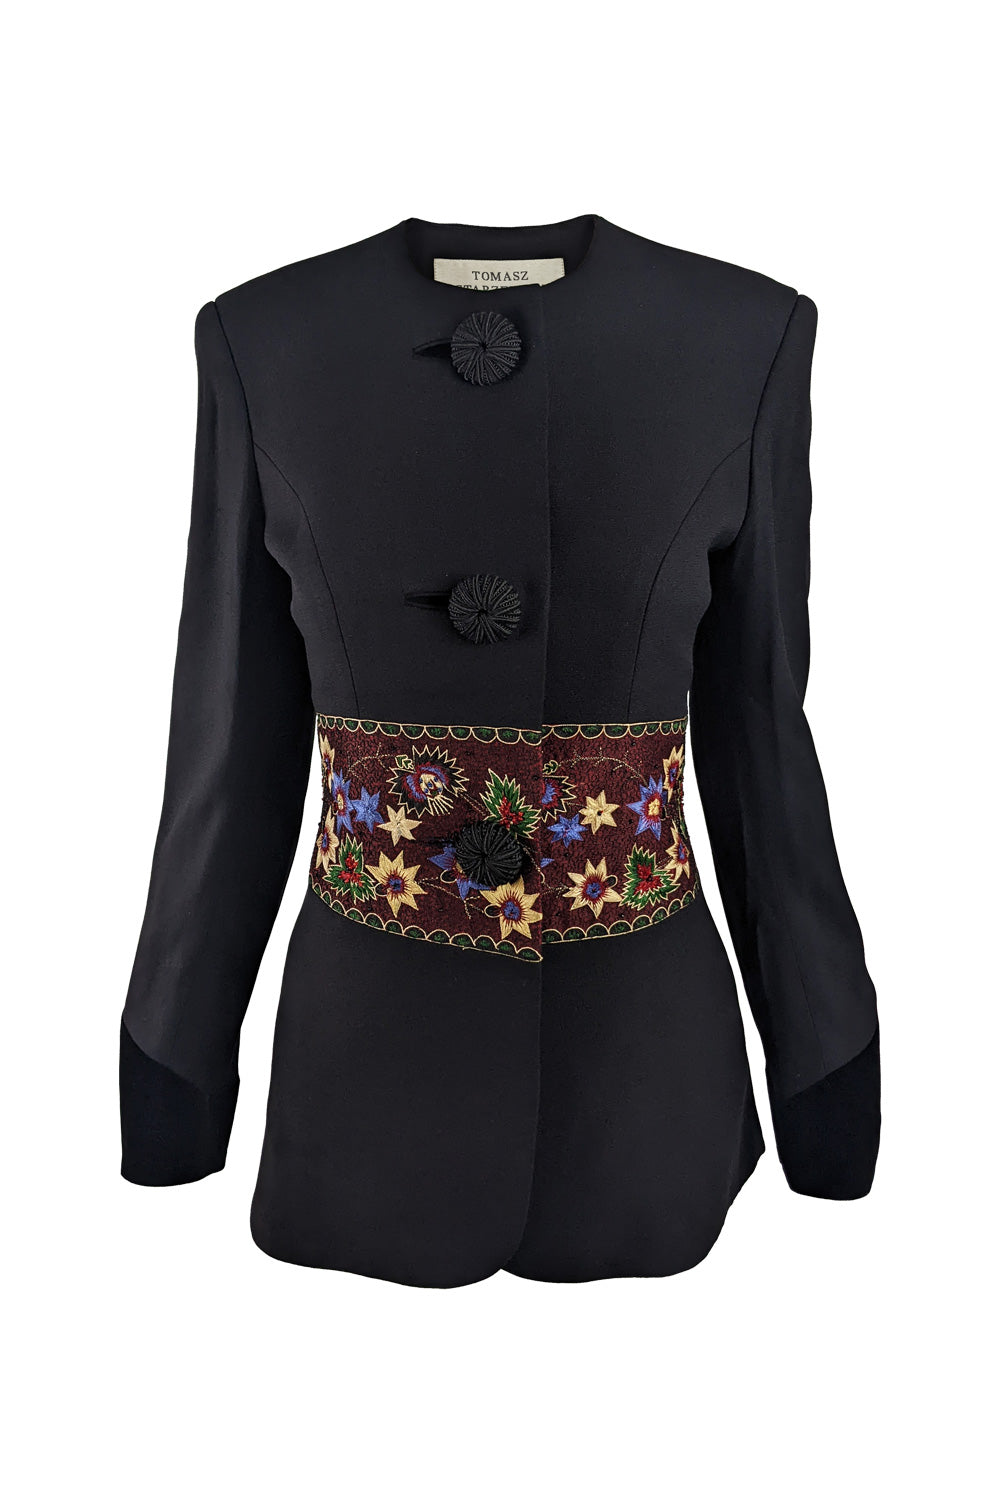 Tomasz Starzewski Vintage Black Crepe Embroidered Jacket, 1980s